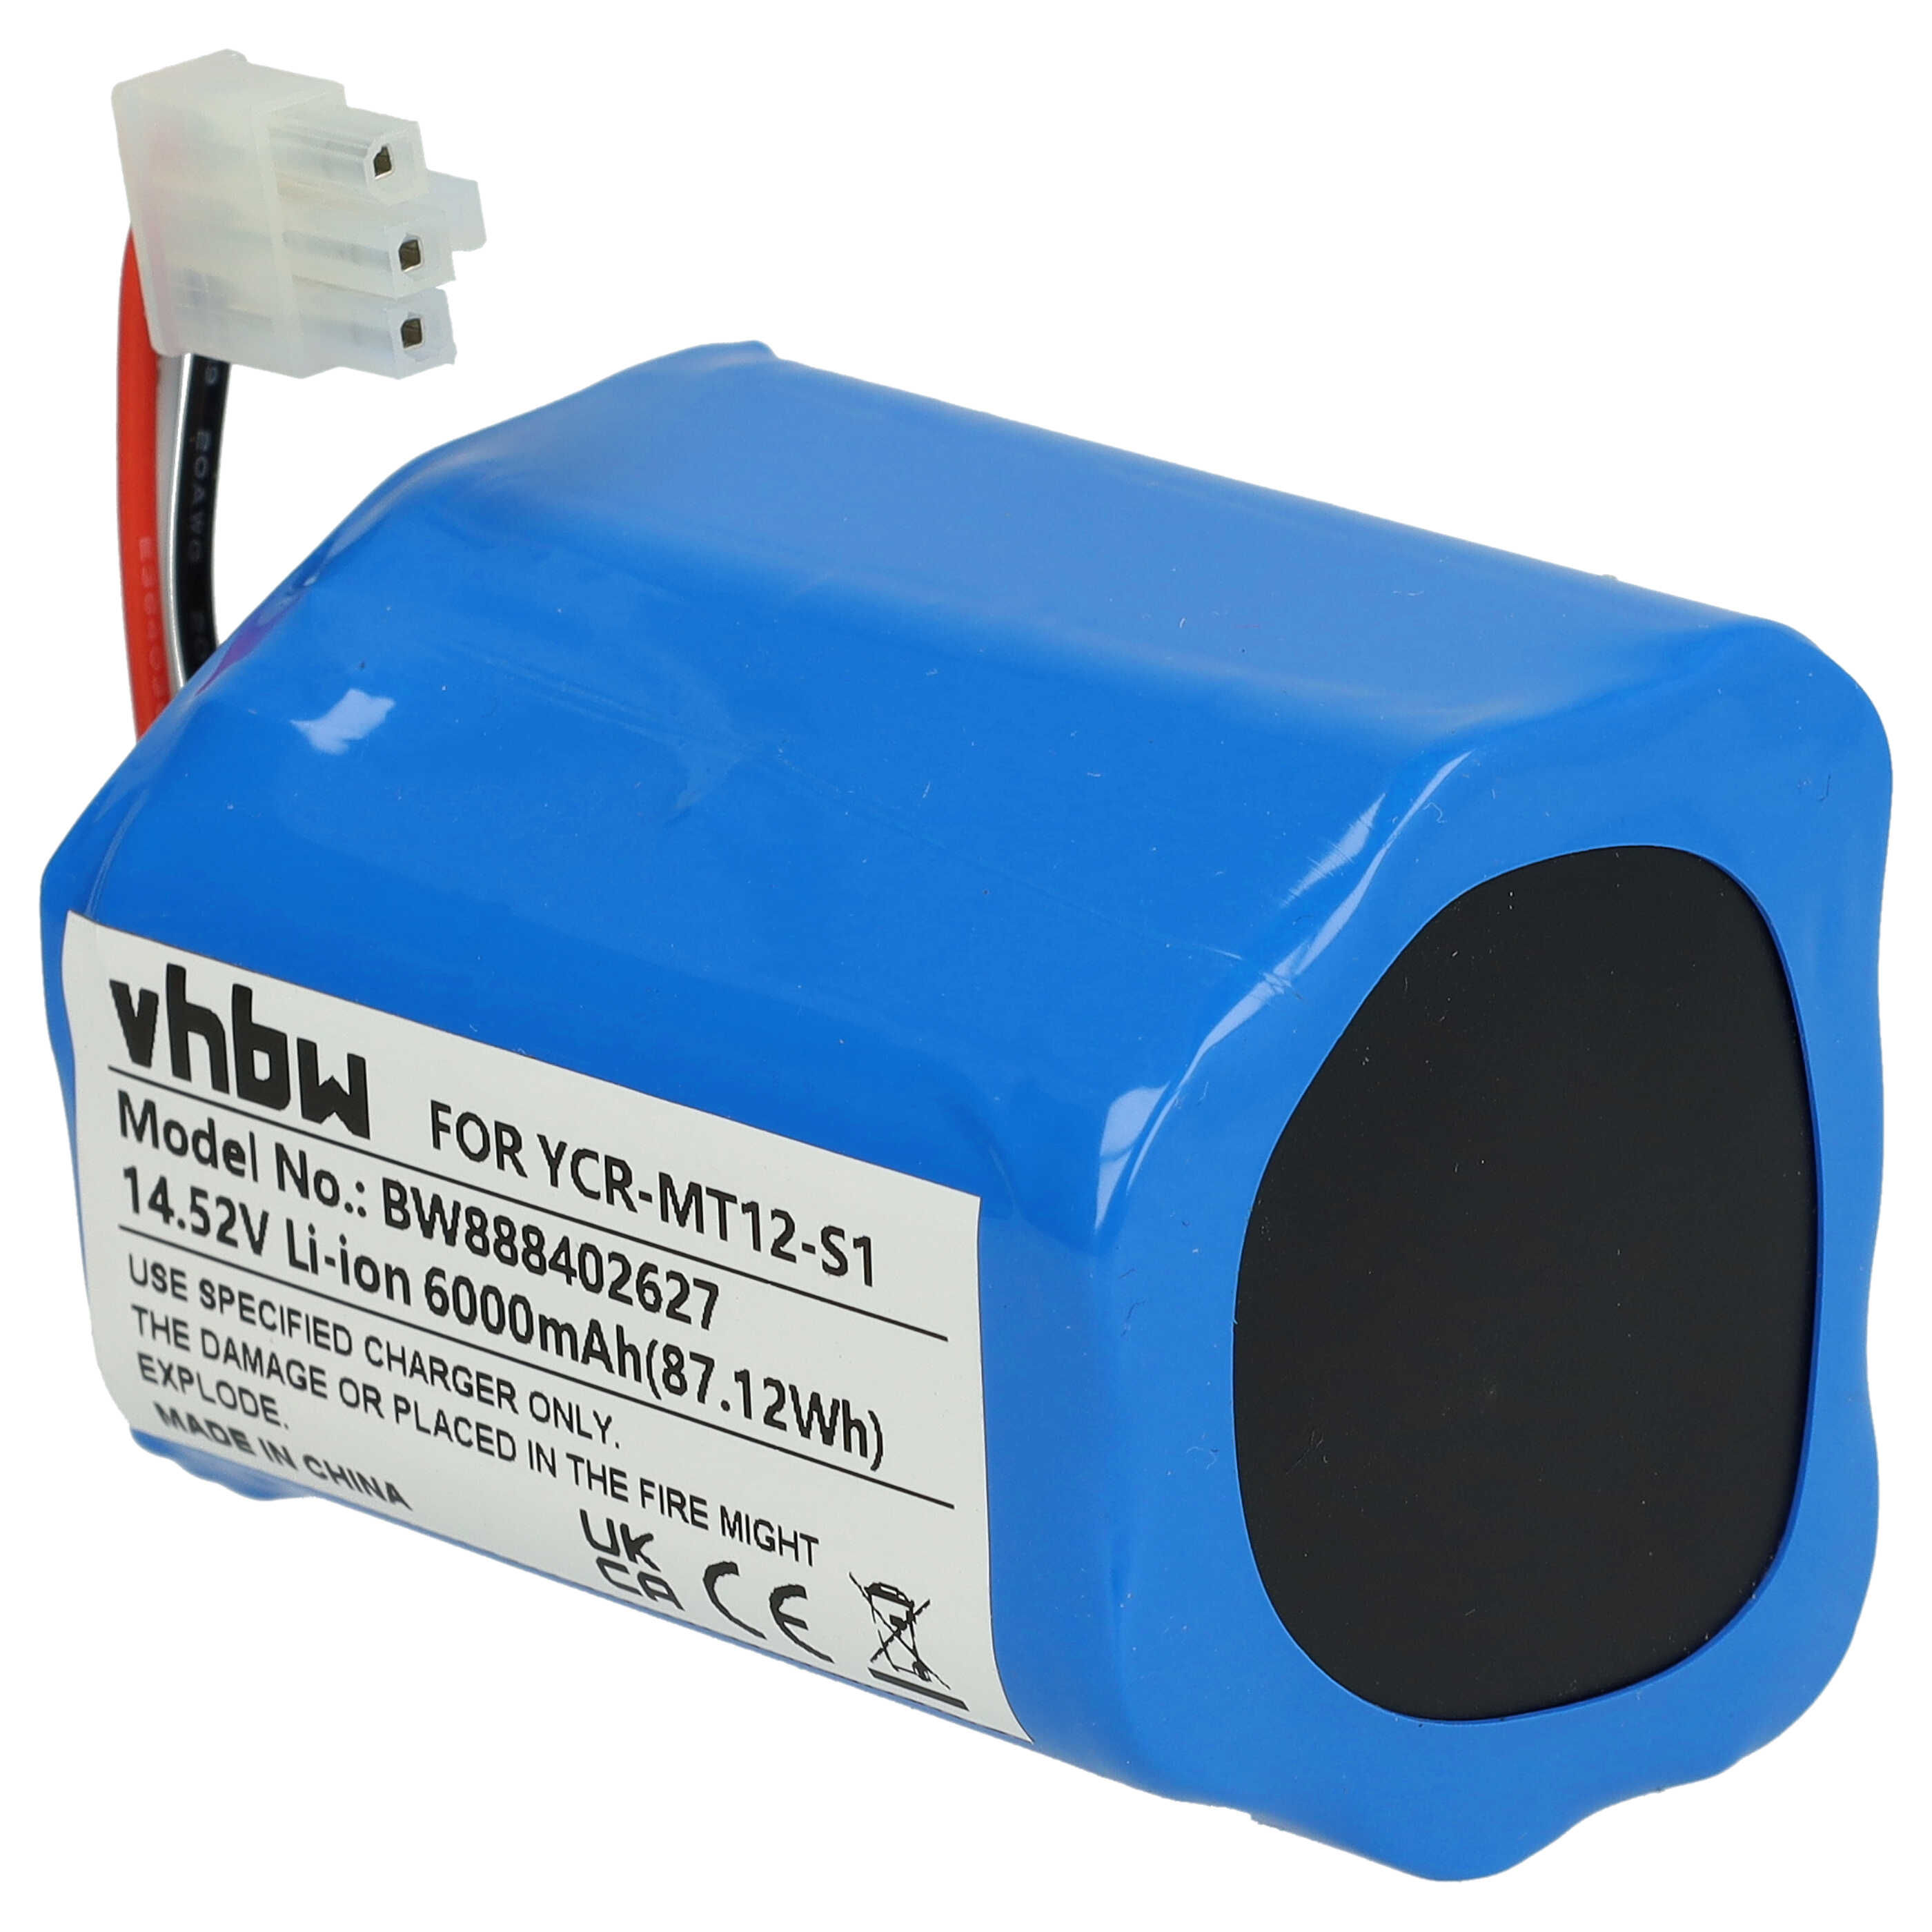 Batteria sostituisce iClebo YCR-M07-20W, YCR-MT12-S1 per robot aspiratore iClebo - 6000mAh 14,52V Li-Ion